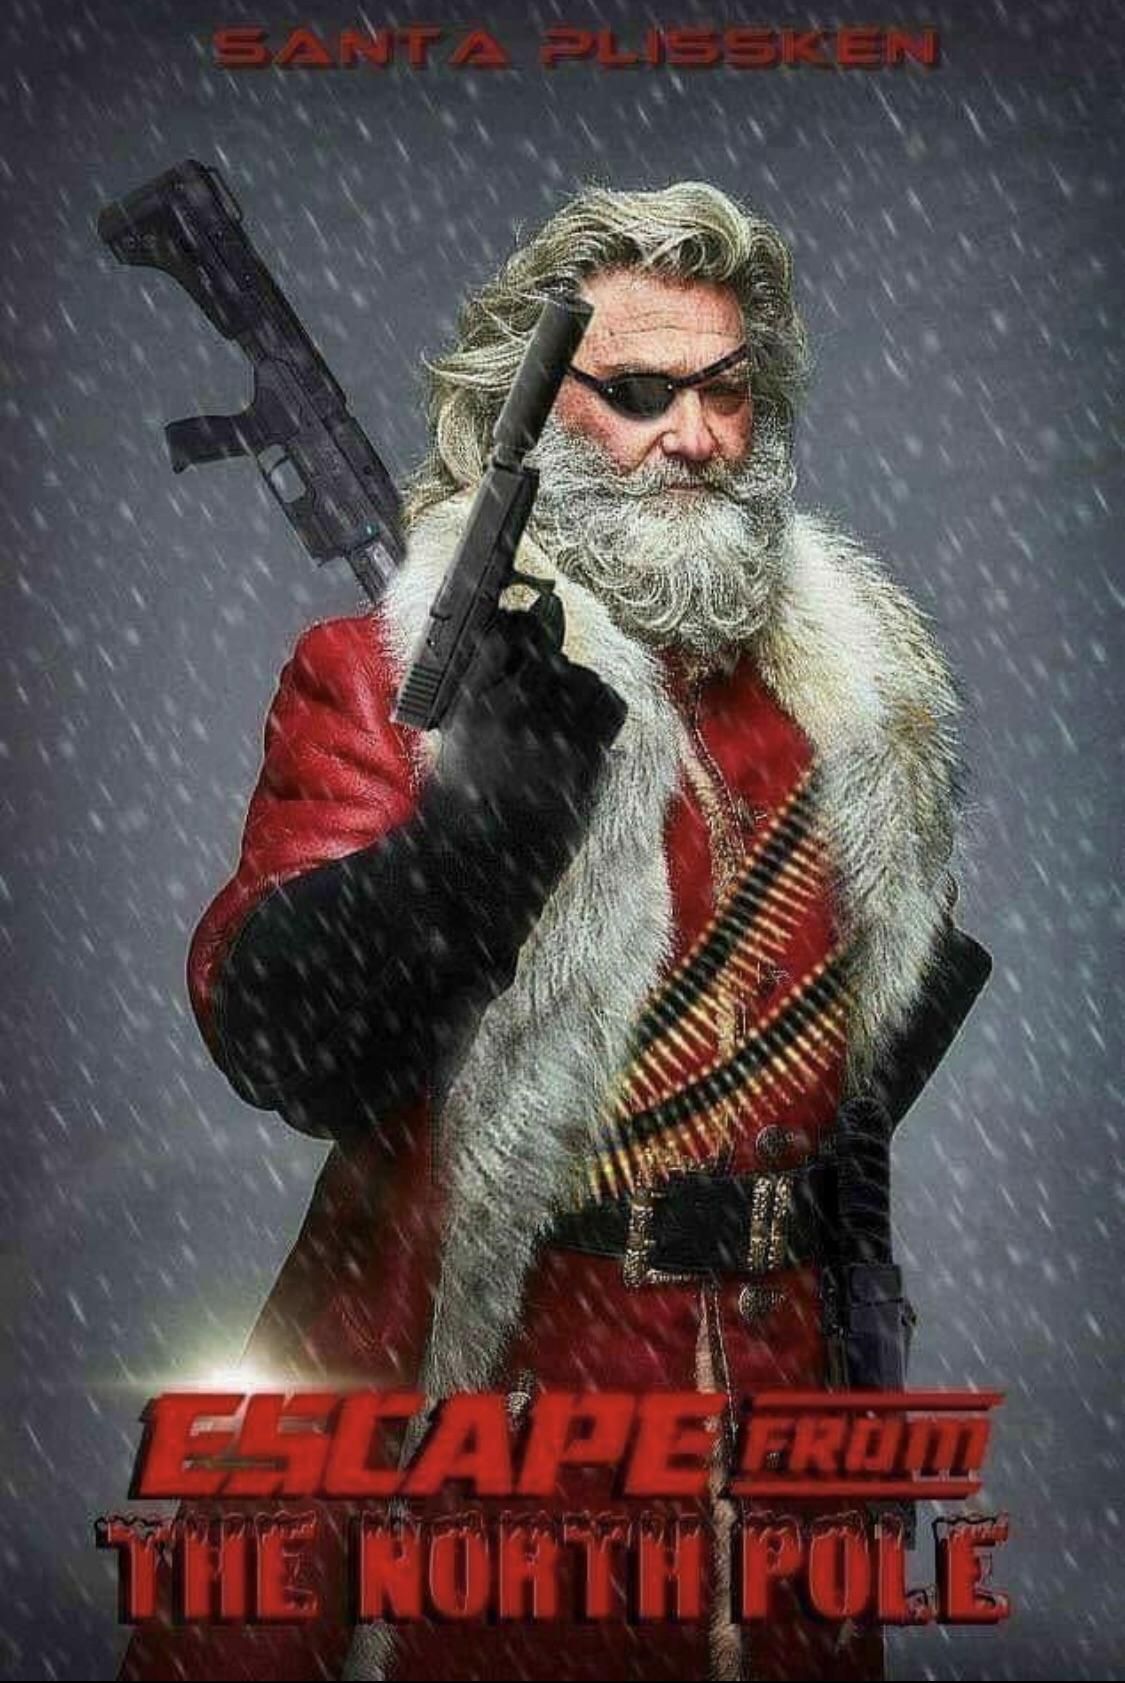 The Santa we needed.